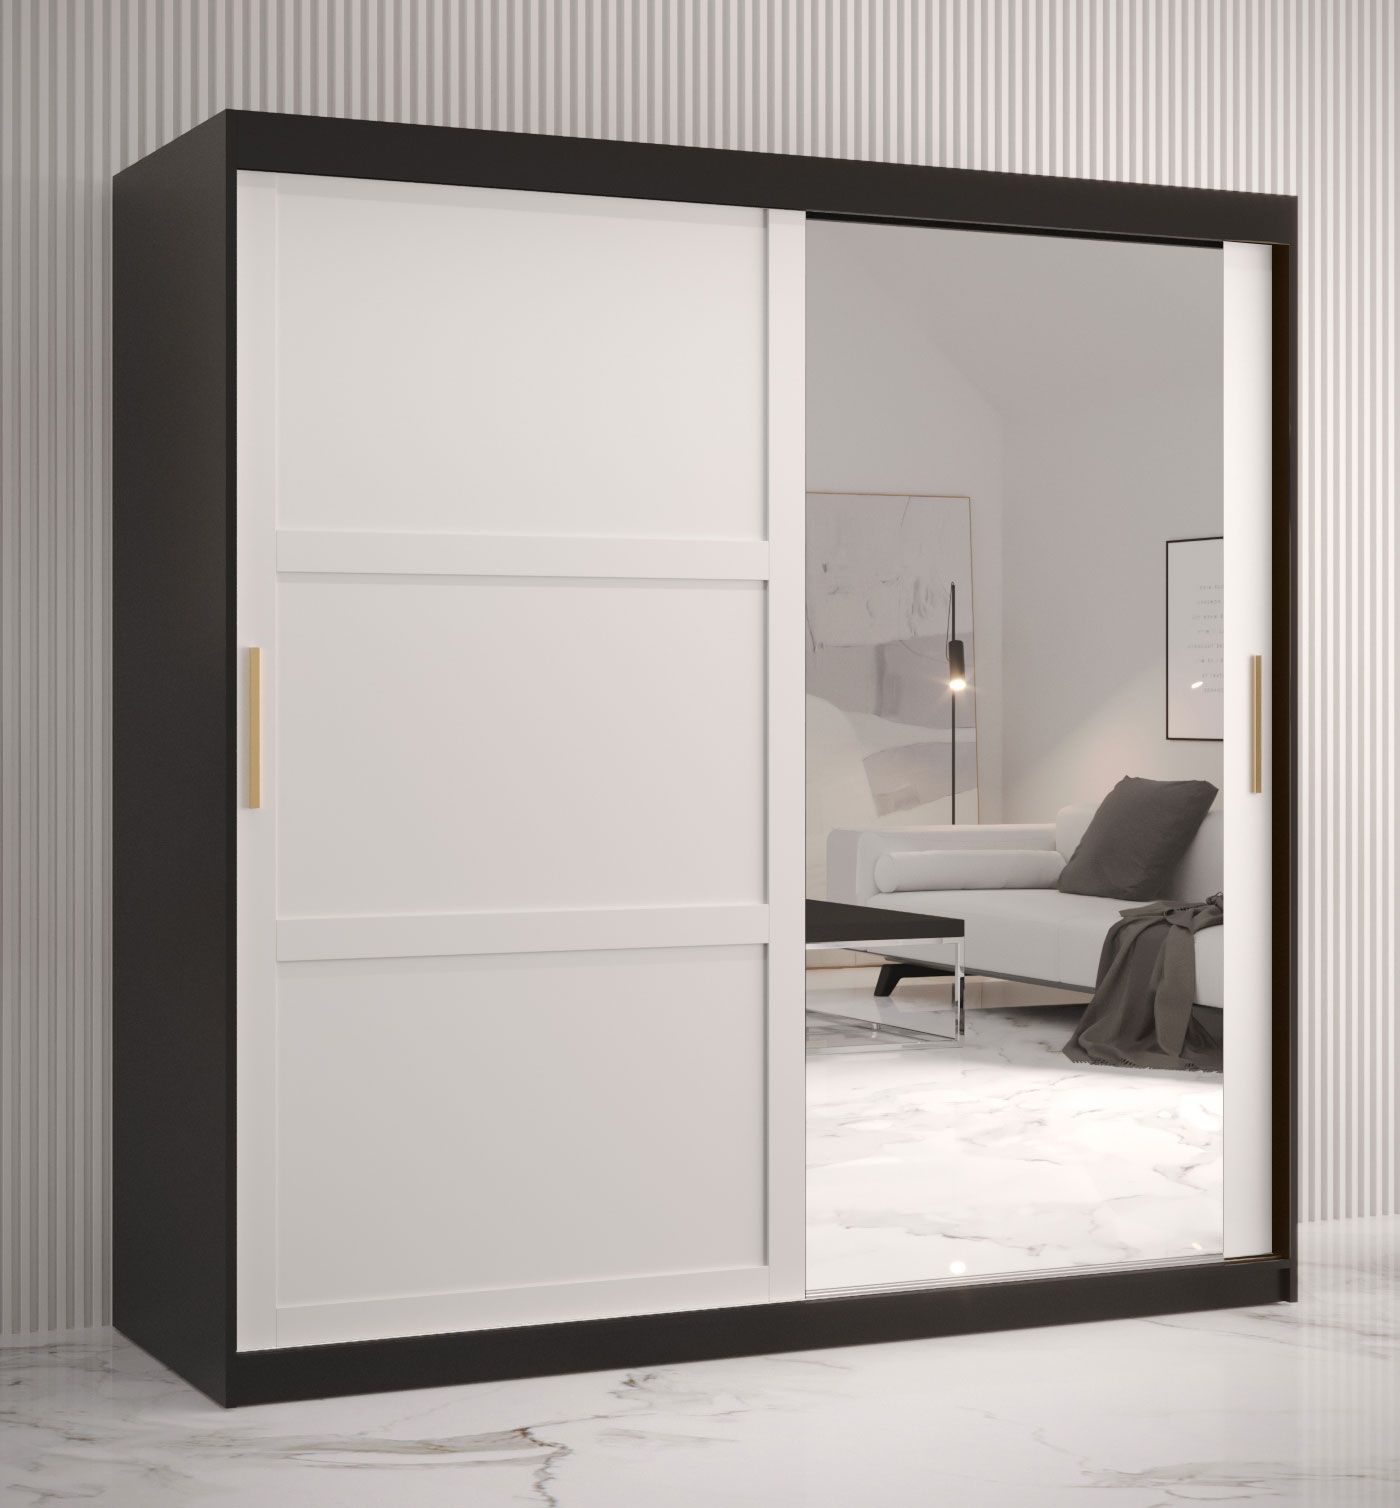 Eenvoudige kledingkast met 10 vakken Liskamm 39, kleur: mat zwart / mat wit - afmetingen: 200 x 180 x 62 cm (H x B x D), met één deur met spiegel